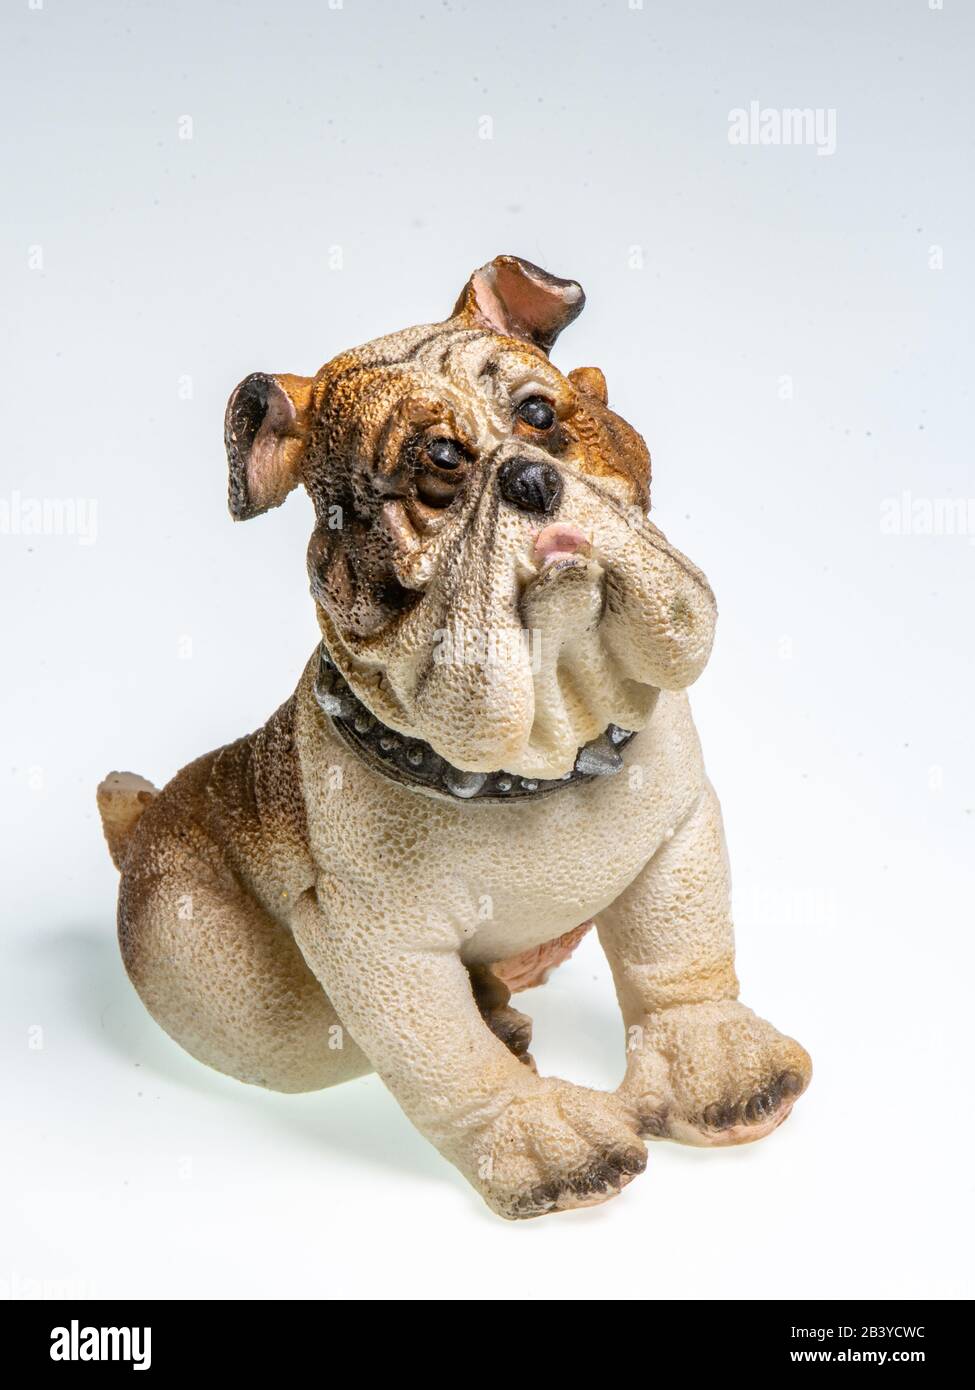 Miniature depicting an English Bulldog breed dog on a white background Stock Photo